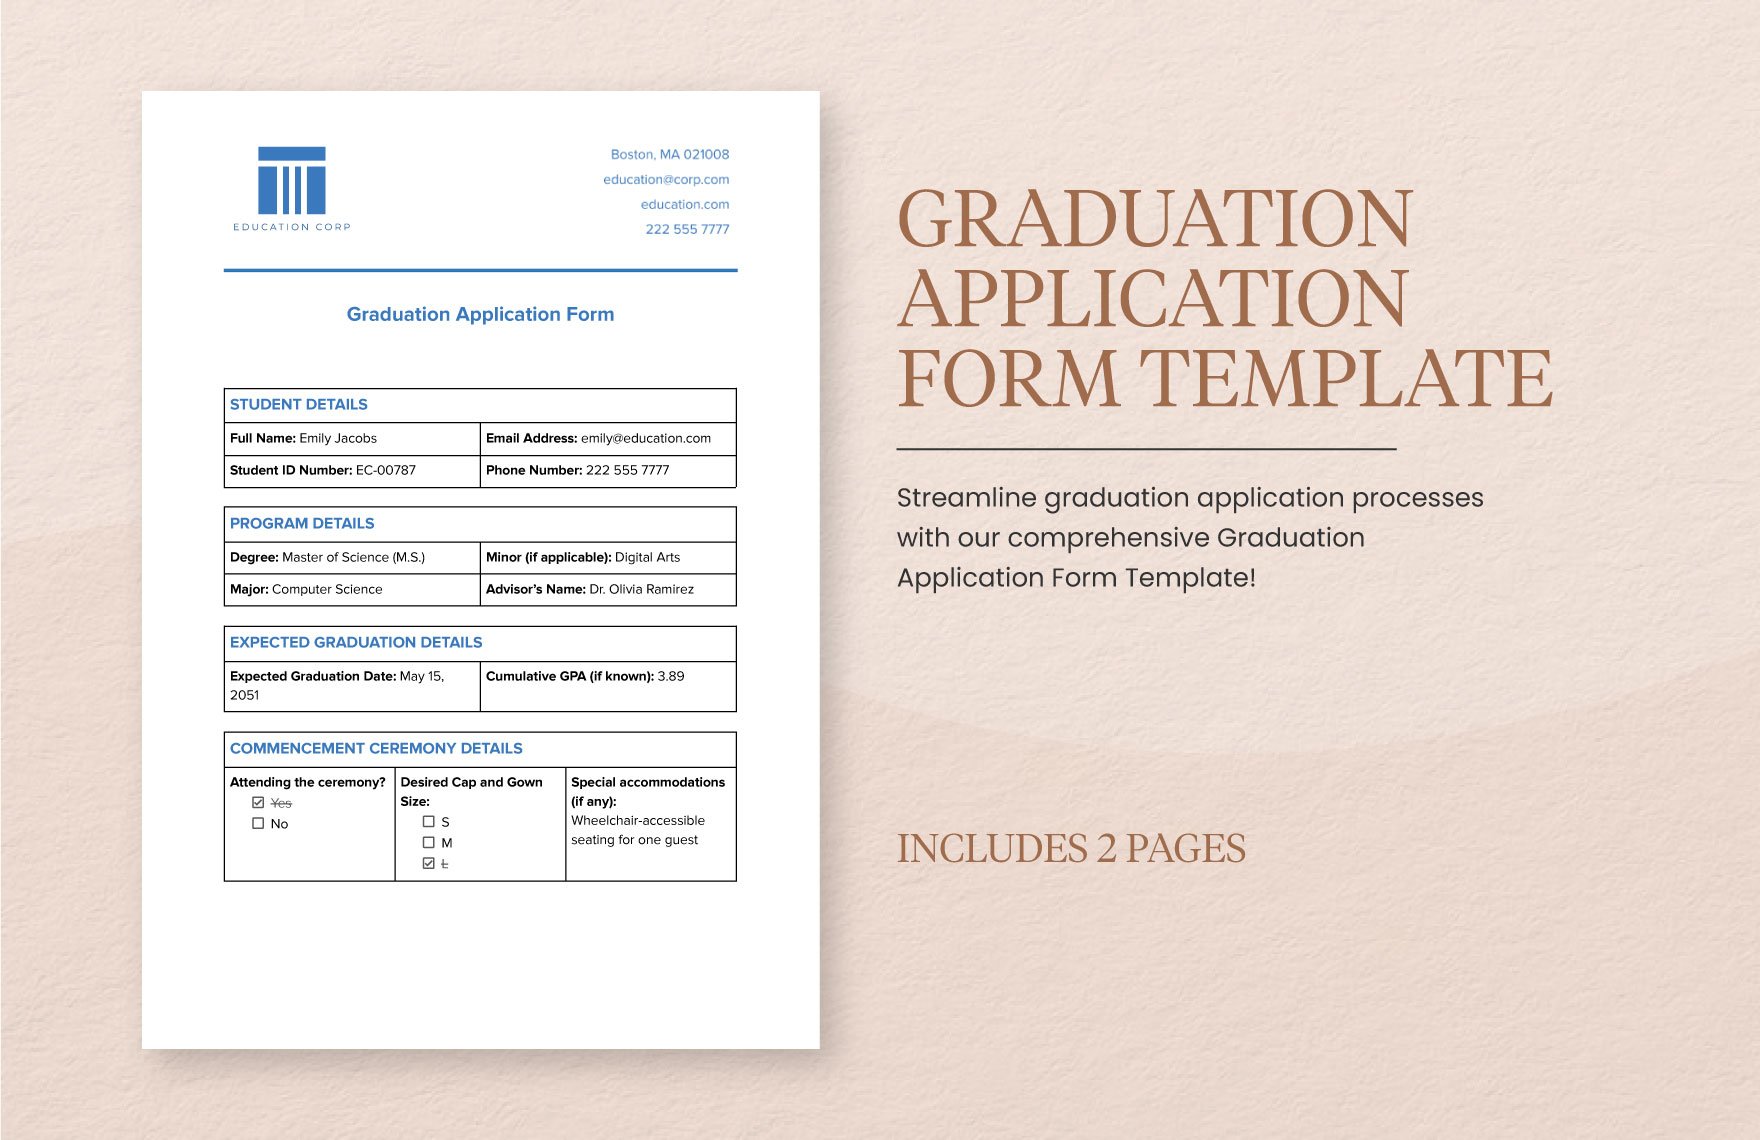 Graduation Application Form Template in Word, Google Docs, PDF